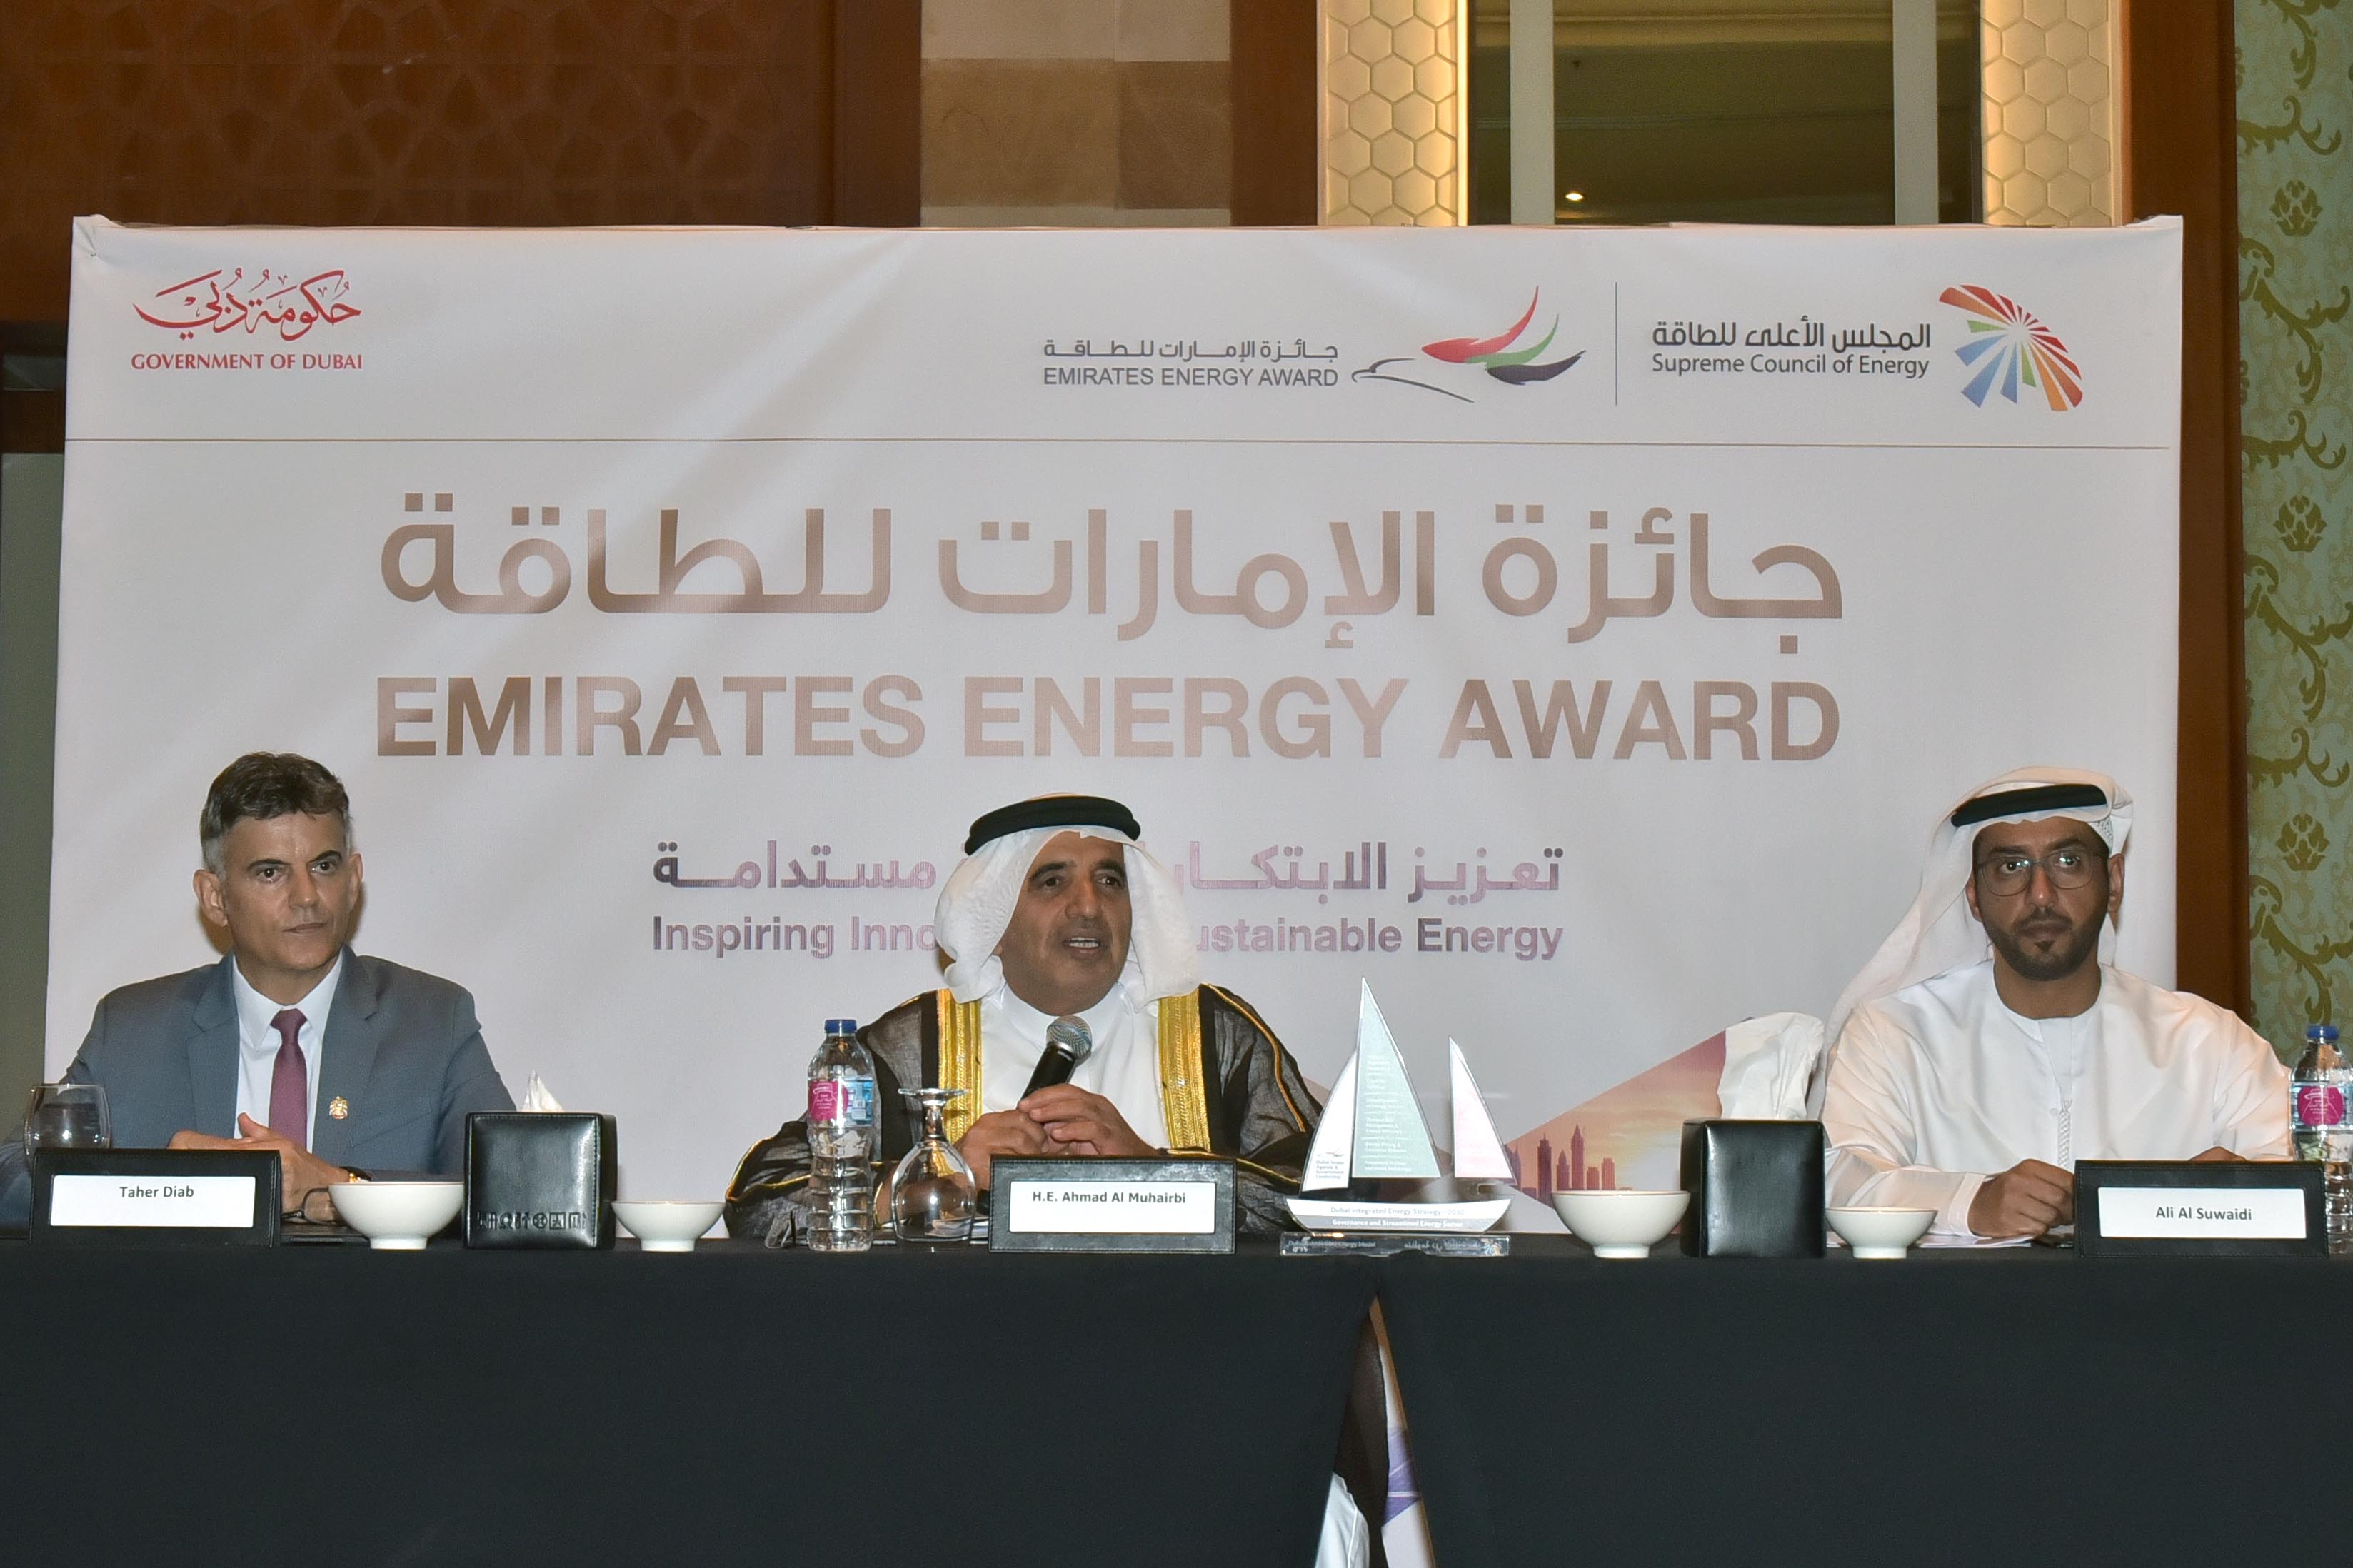 Dubai Supreme Council of Energy unveiled Emirates Energy Award 2020 in Cairo